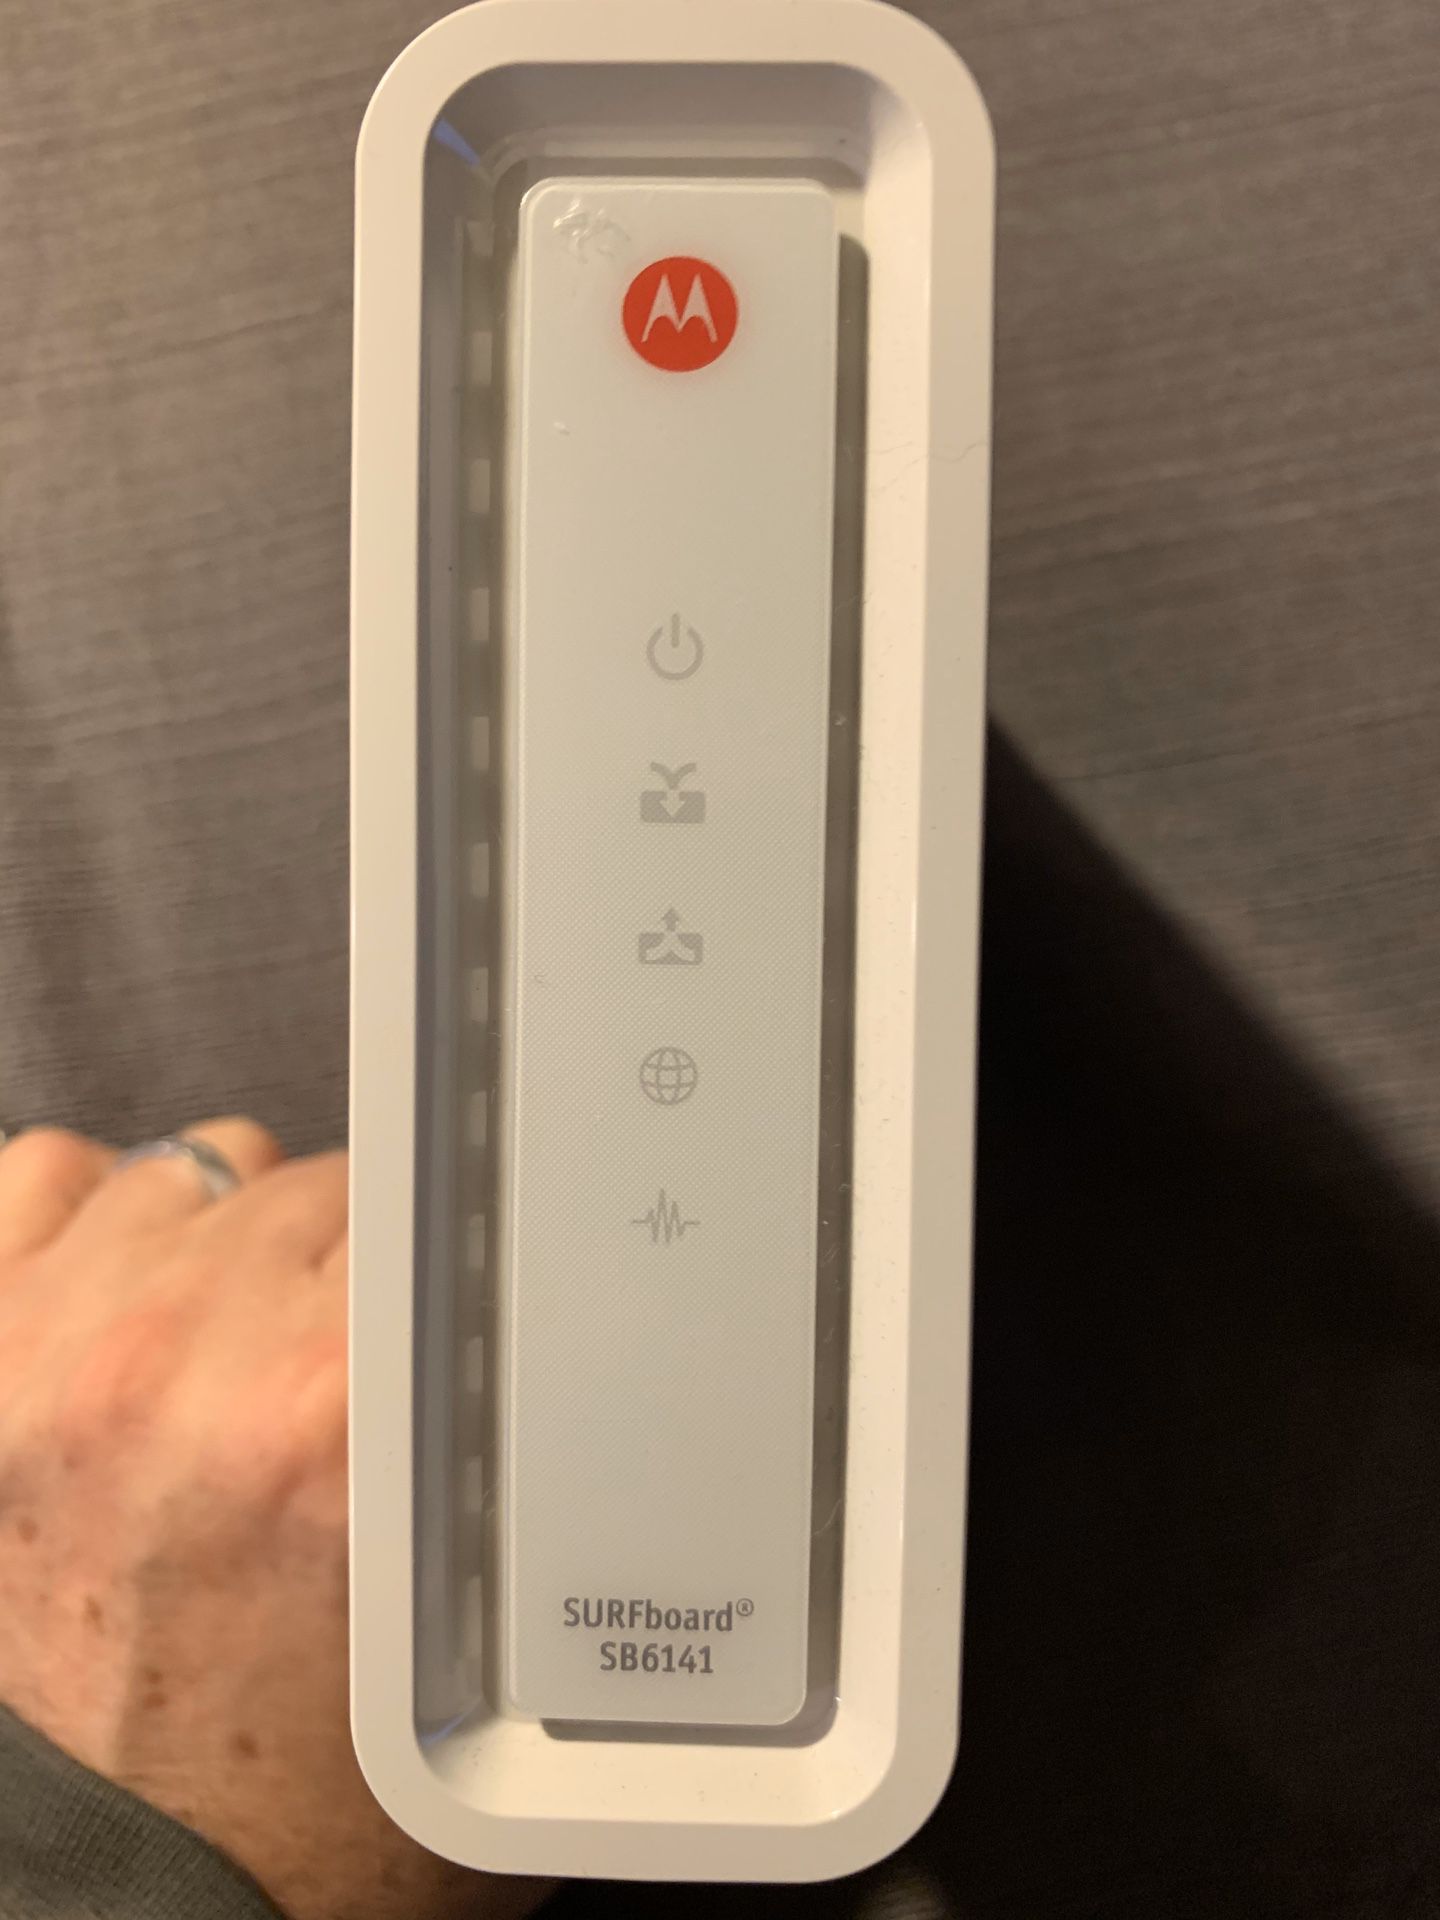 Motorola SB6141 Cable Modem